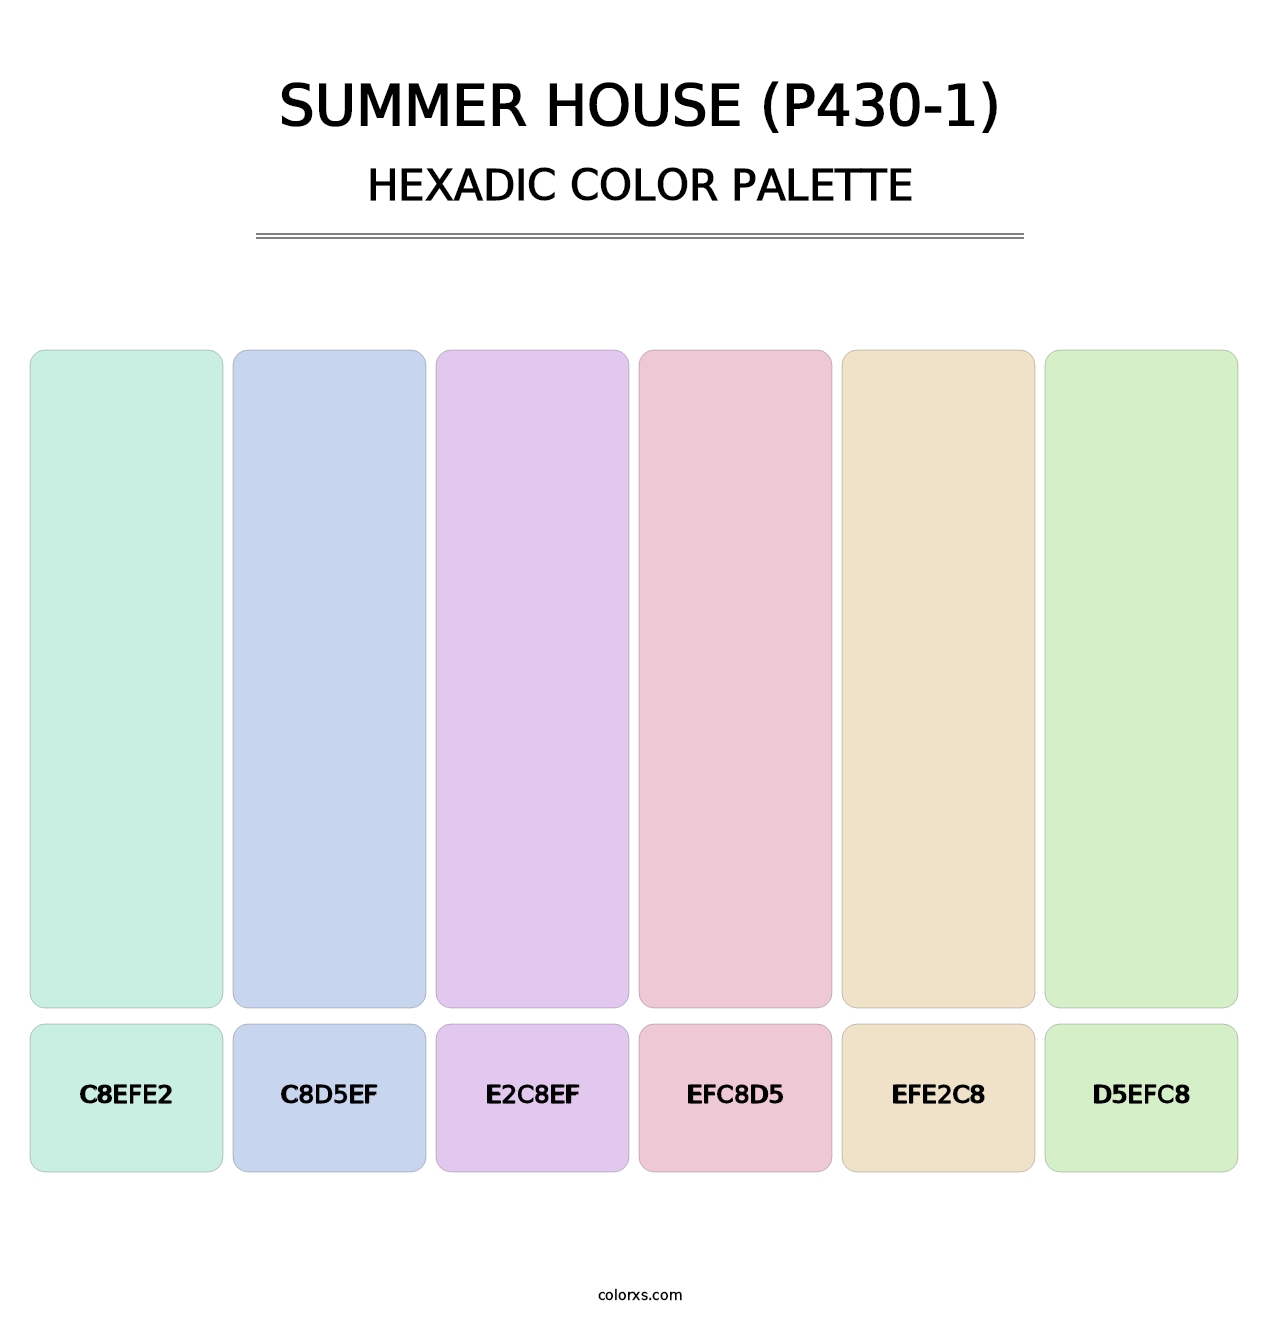 Summer House (P430-1) - Hexadic Color Palette